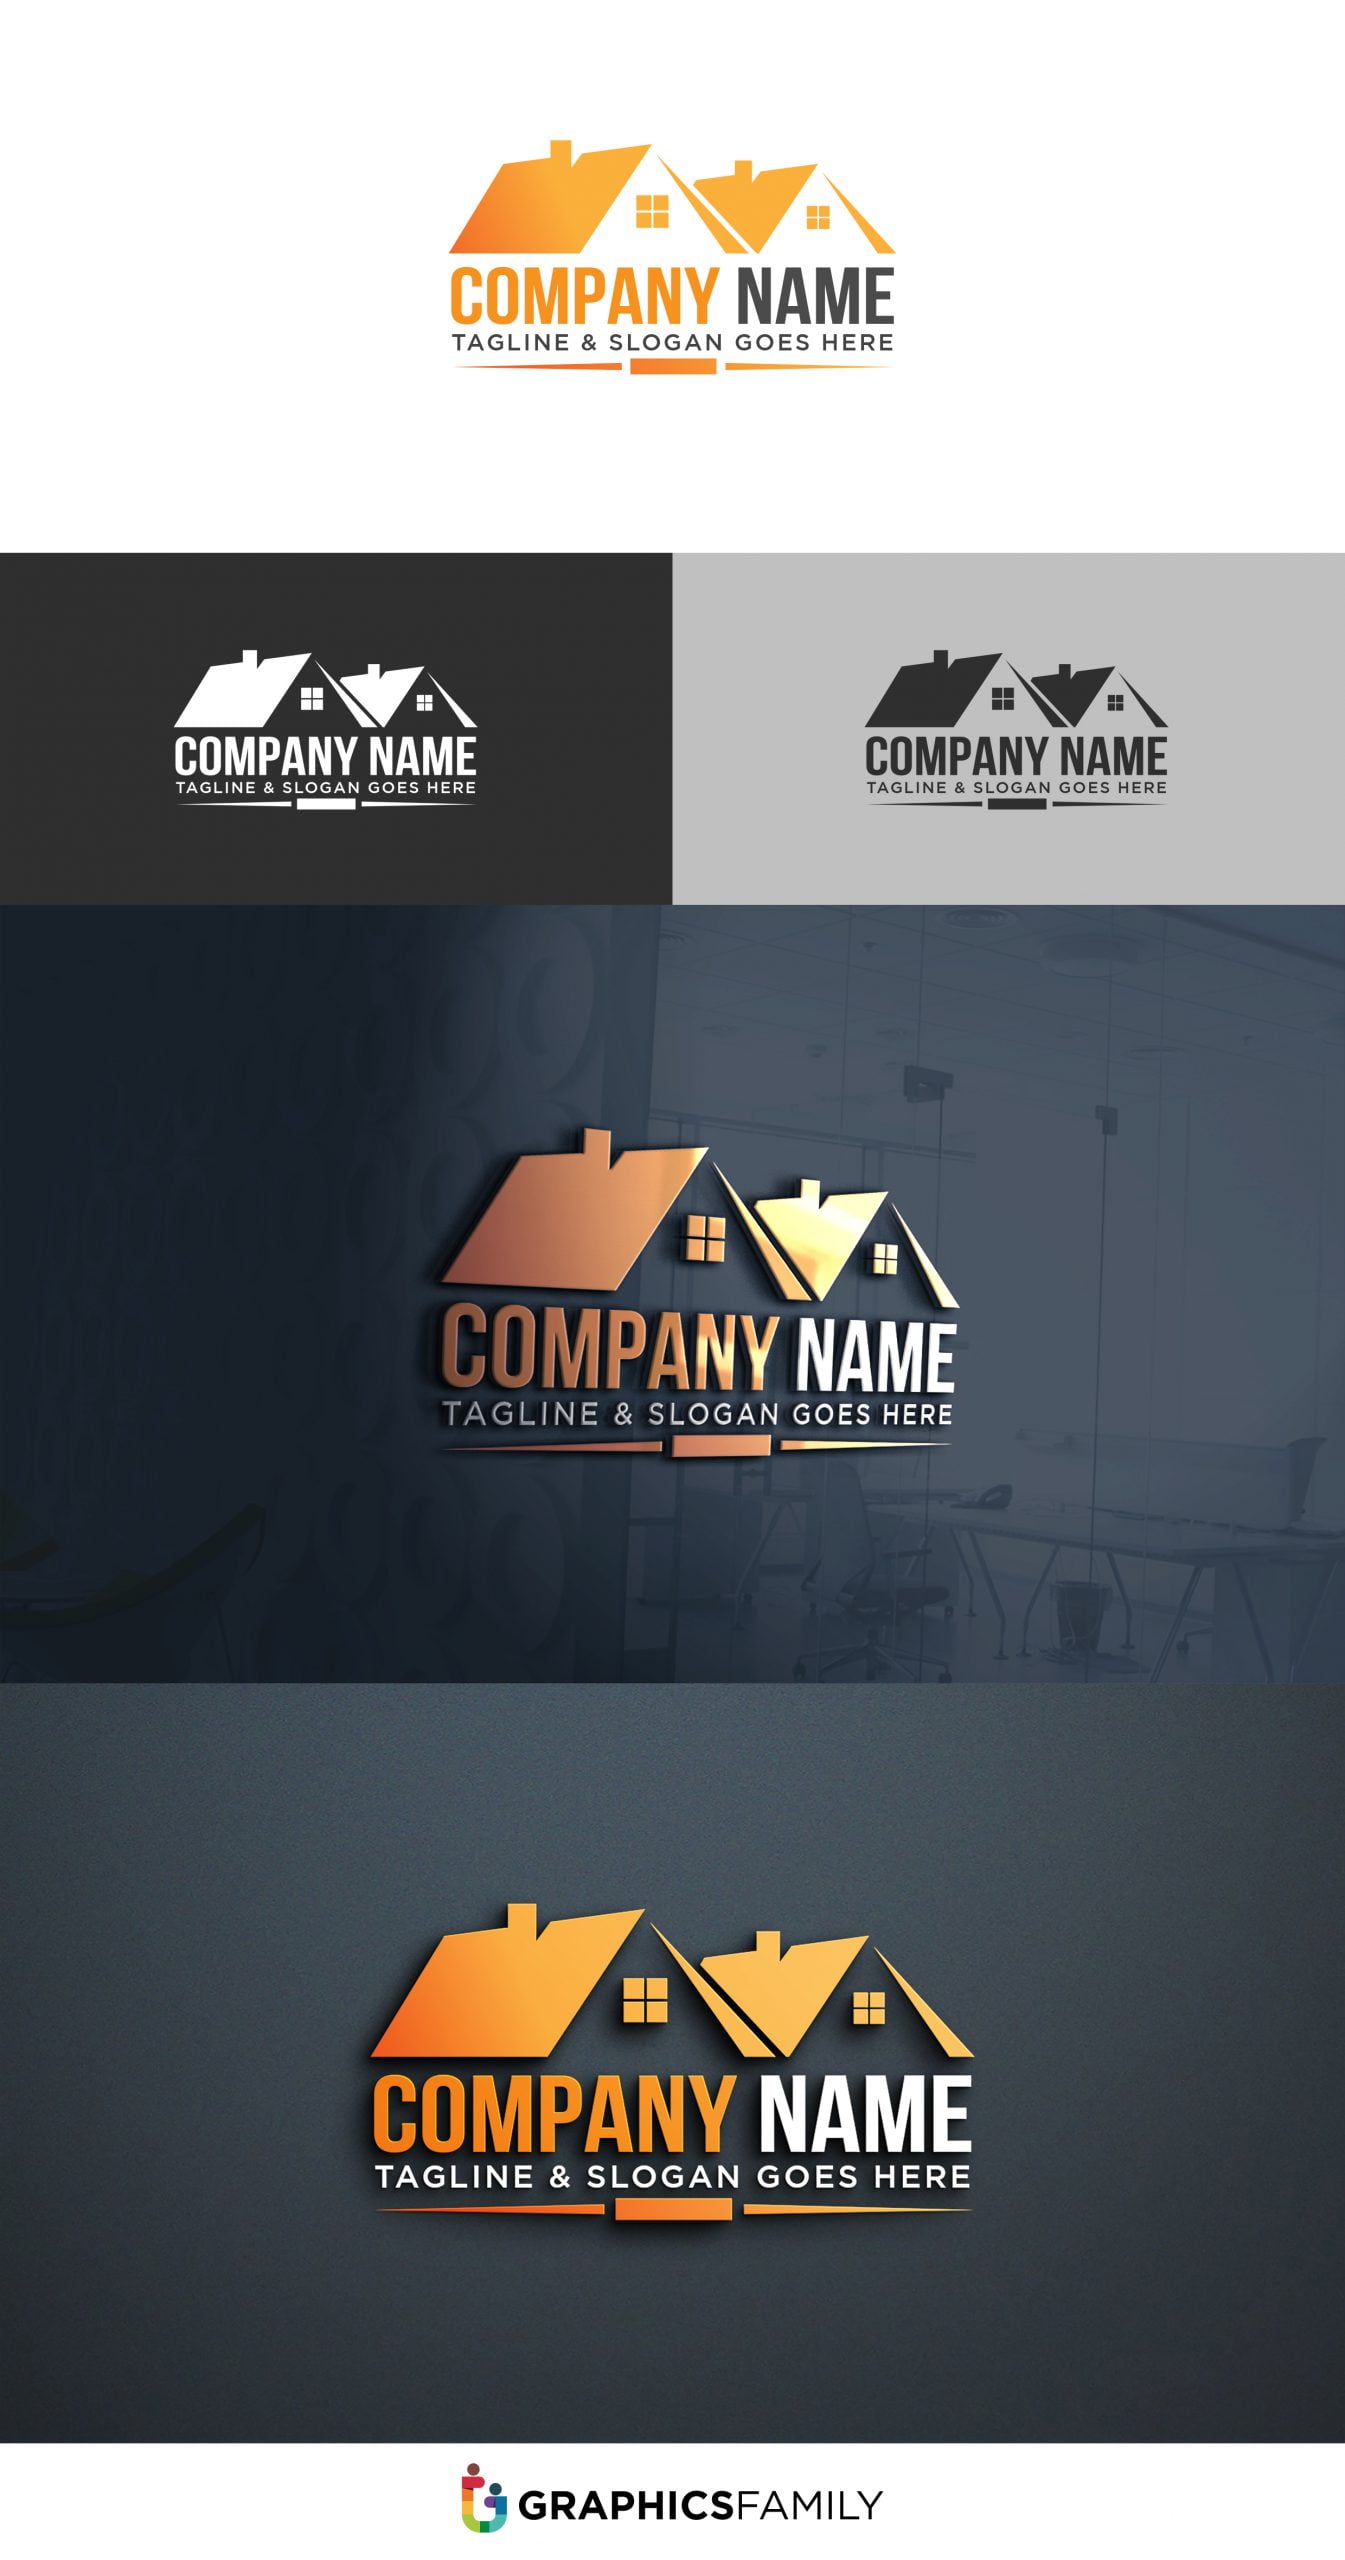 construction logo design samples